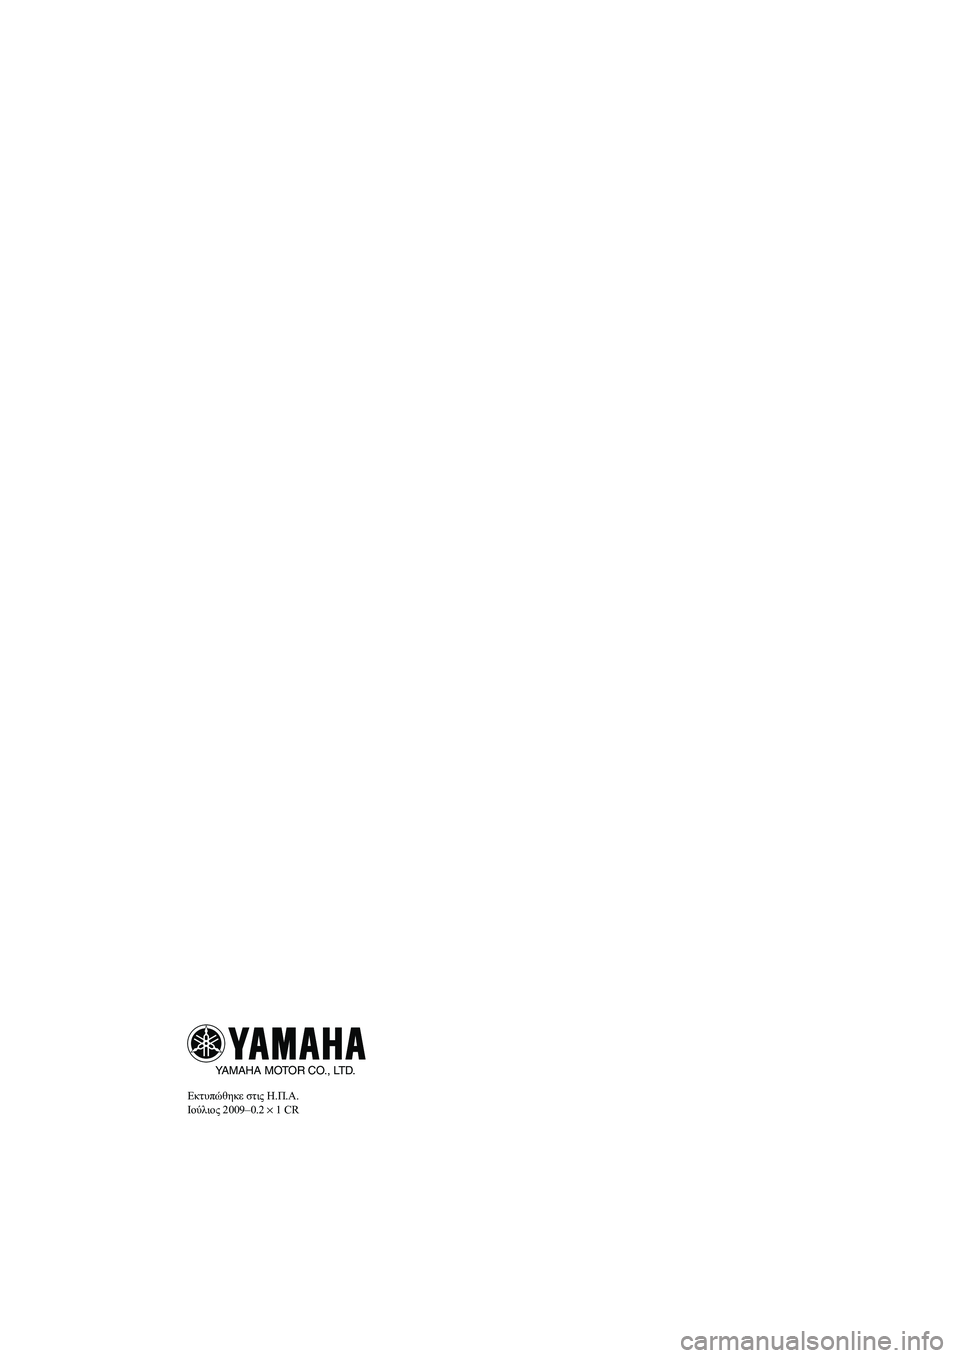 YAMAHA FX SHO 2010  ΟΔΗΓΌΣ ΧΡΉΣΗΣ (in Greek) YAMAHA MOTOR CO., LTD.
Εκτυπώθηκε στις Η.Π.A.
Ιούλιος 2009–0.2 × 1 CR
UF1W72R0.book  Page 1  Friday, June 19, 2009  7:35 PM 